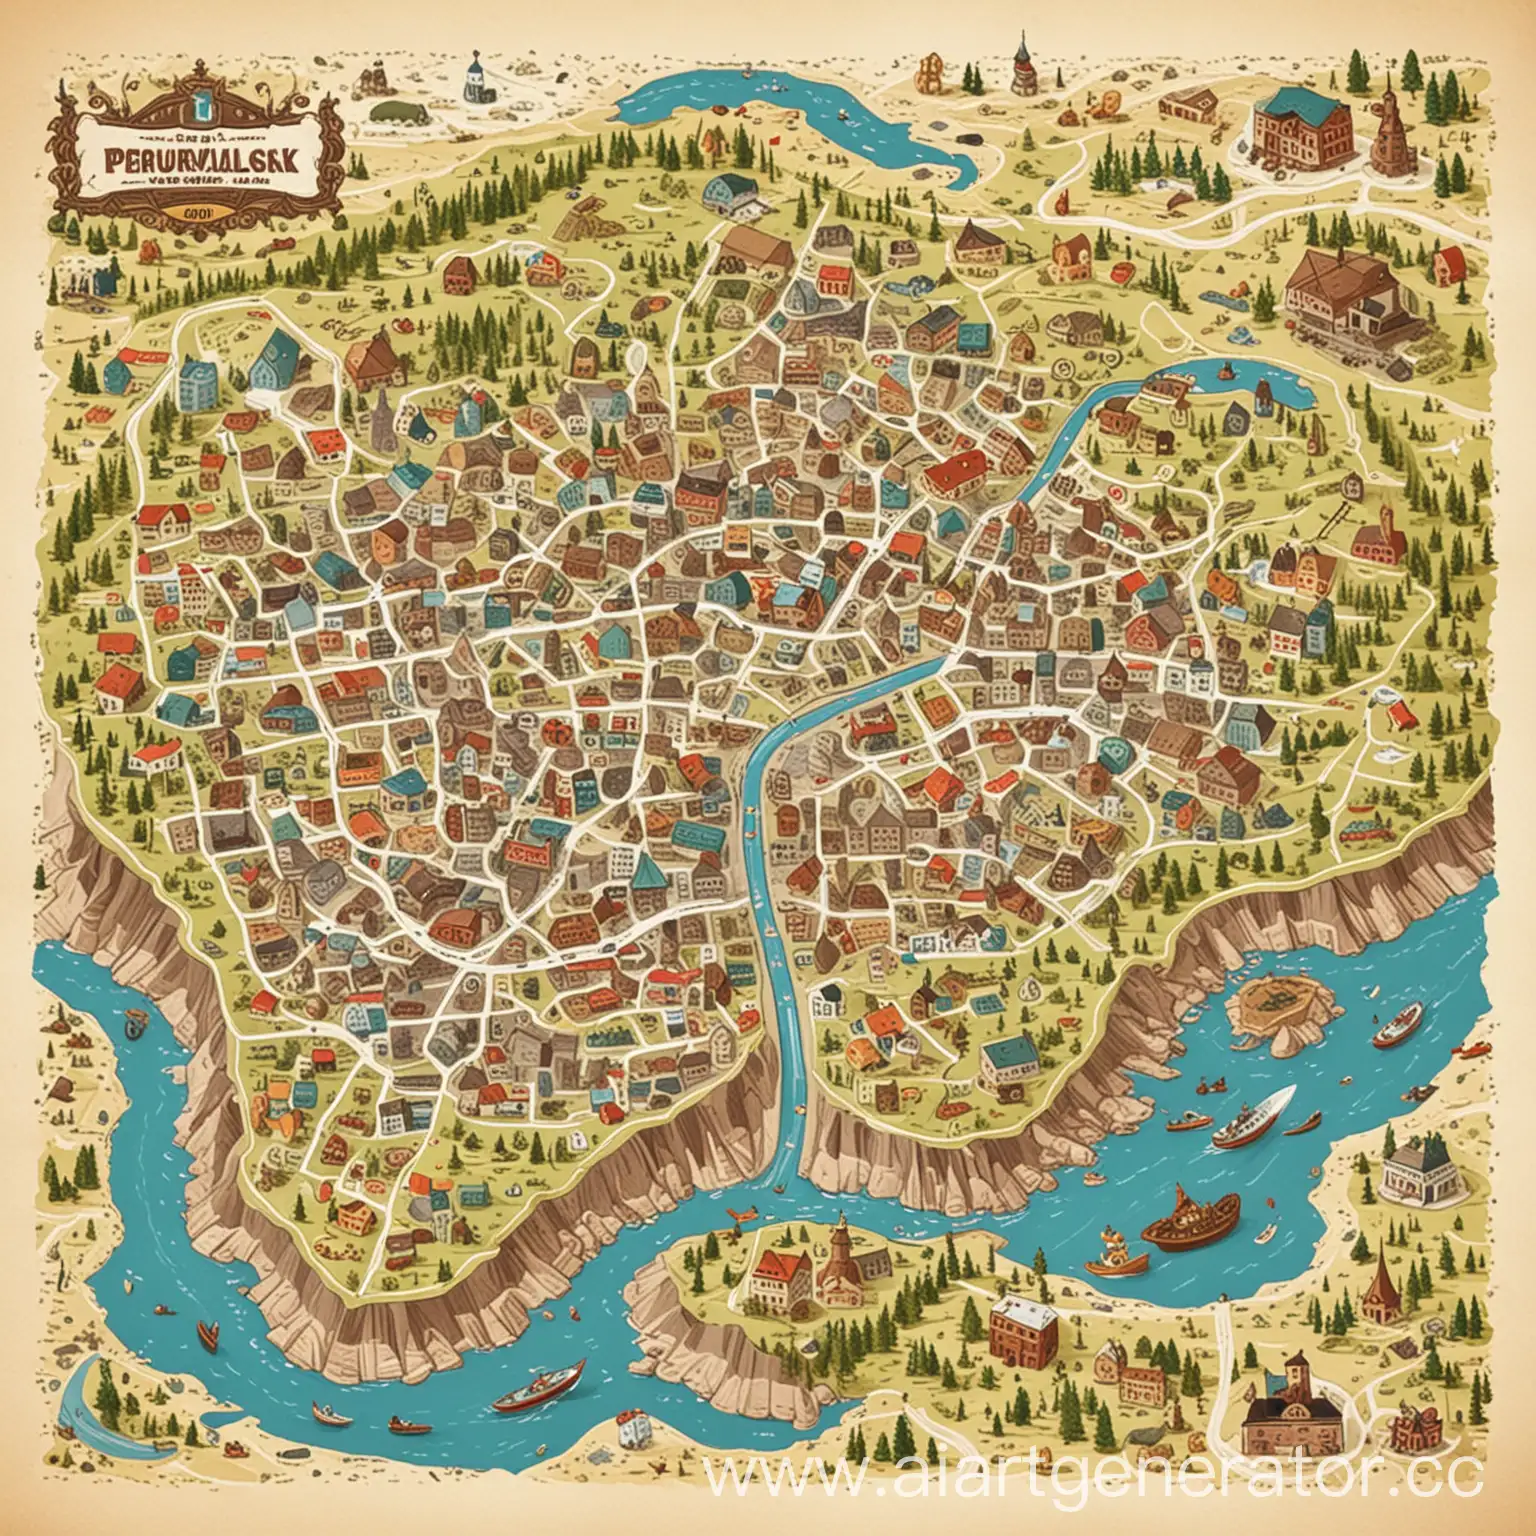 Cartoonish-Map-of-Pervouralsk-Whimsical-Representation-of-the-Citys-Layout